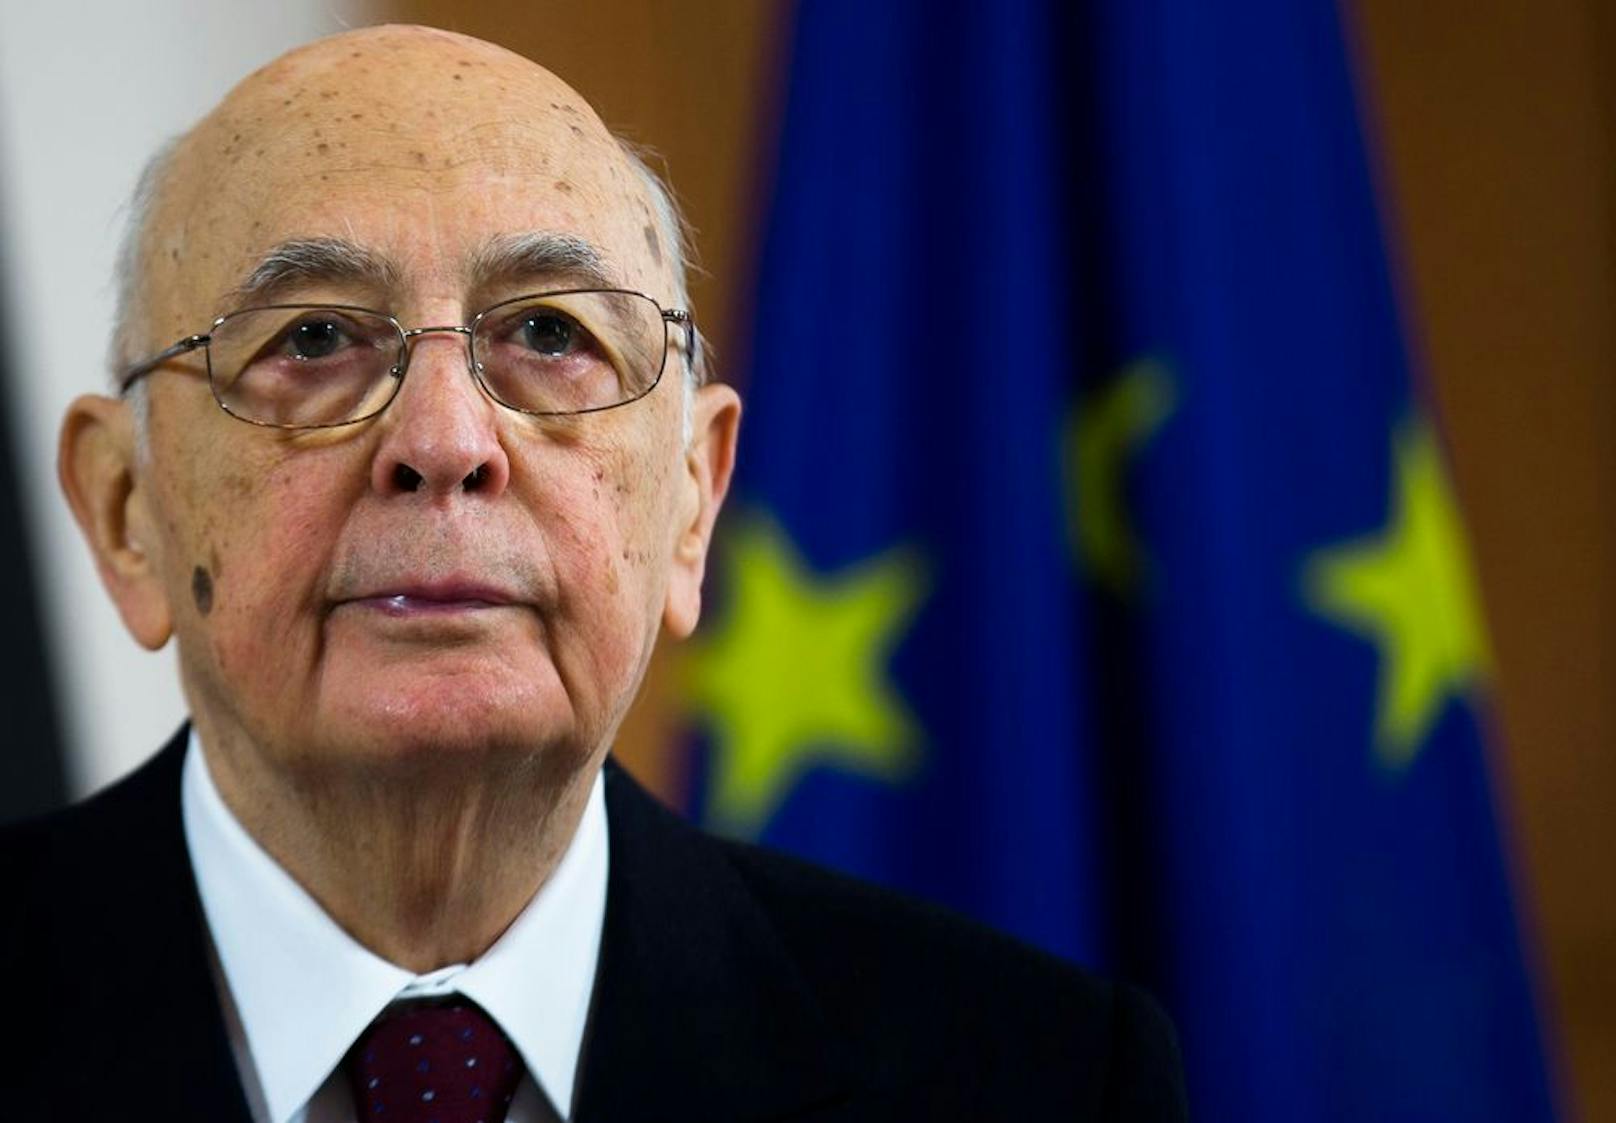 Italiens Ex-Staatspräsident Giorgio Napolitano ist tot